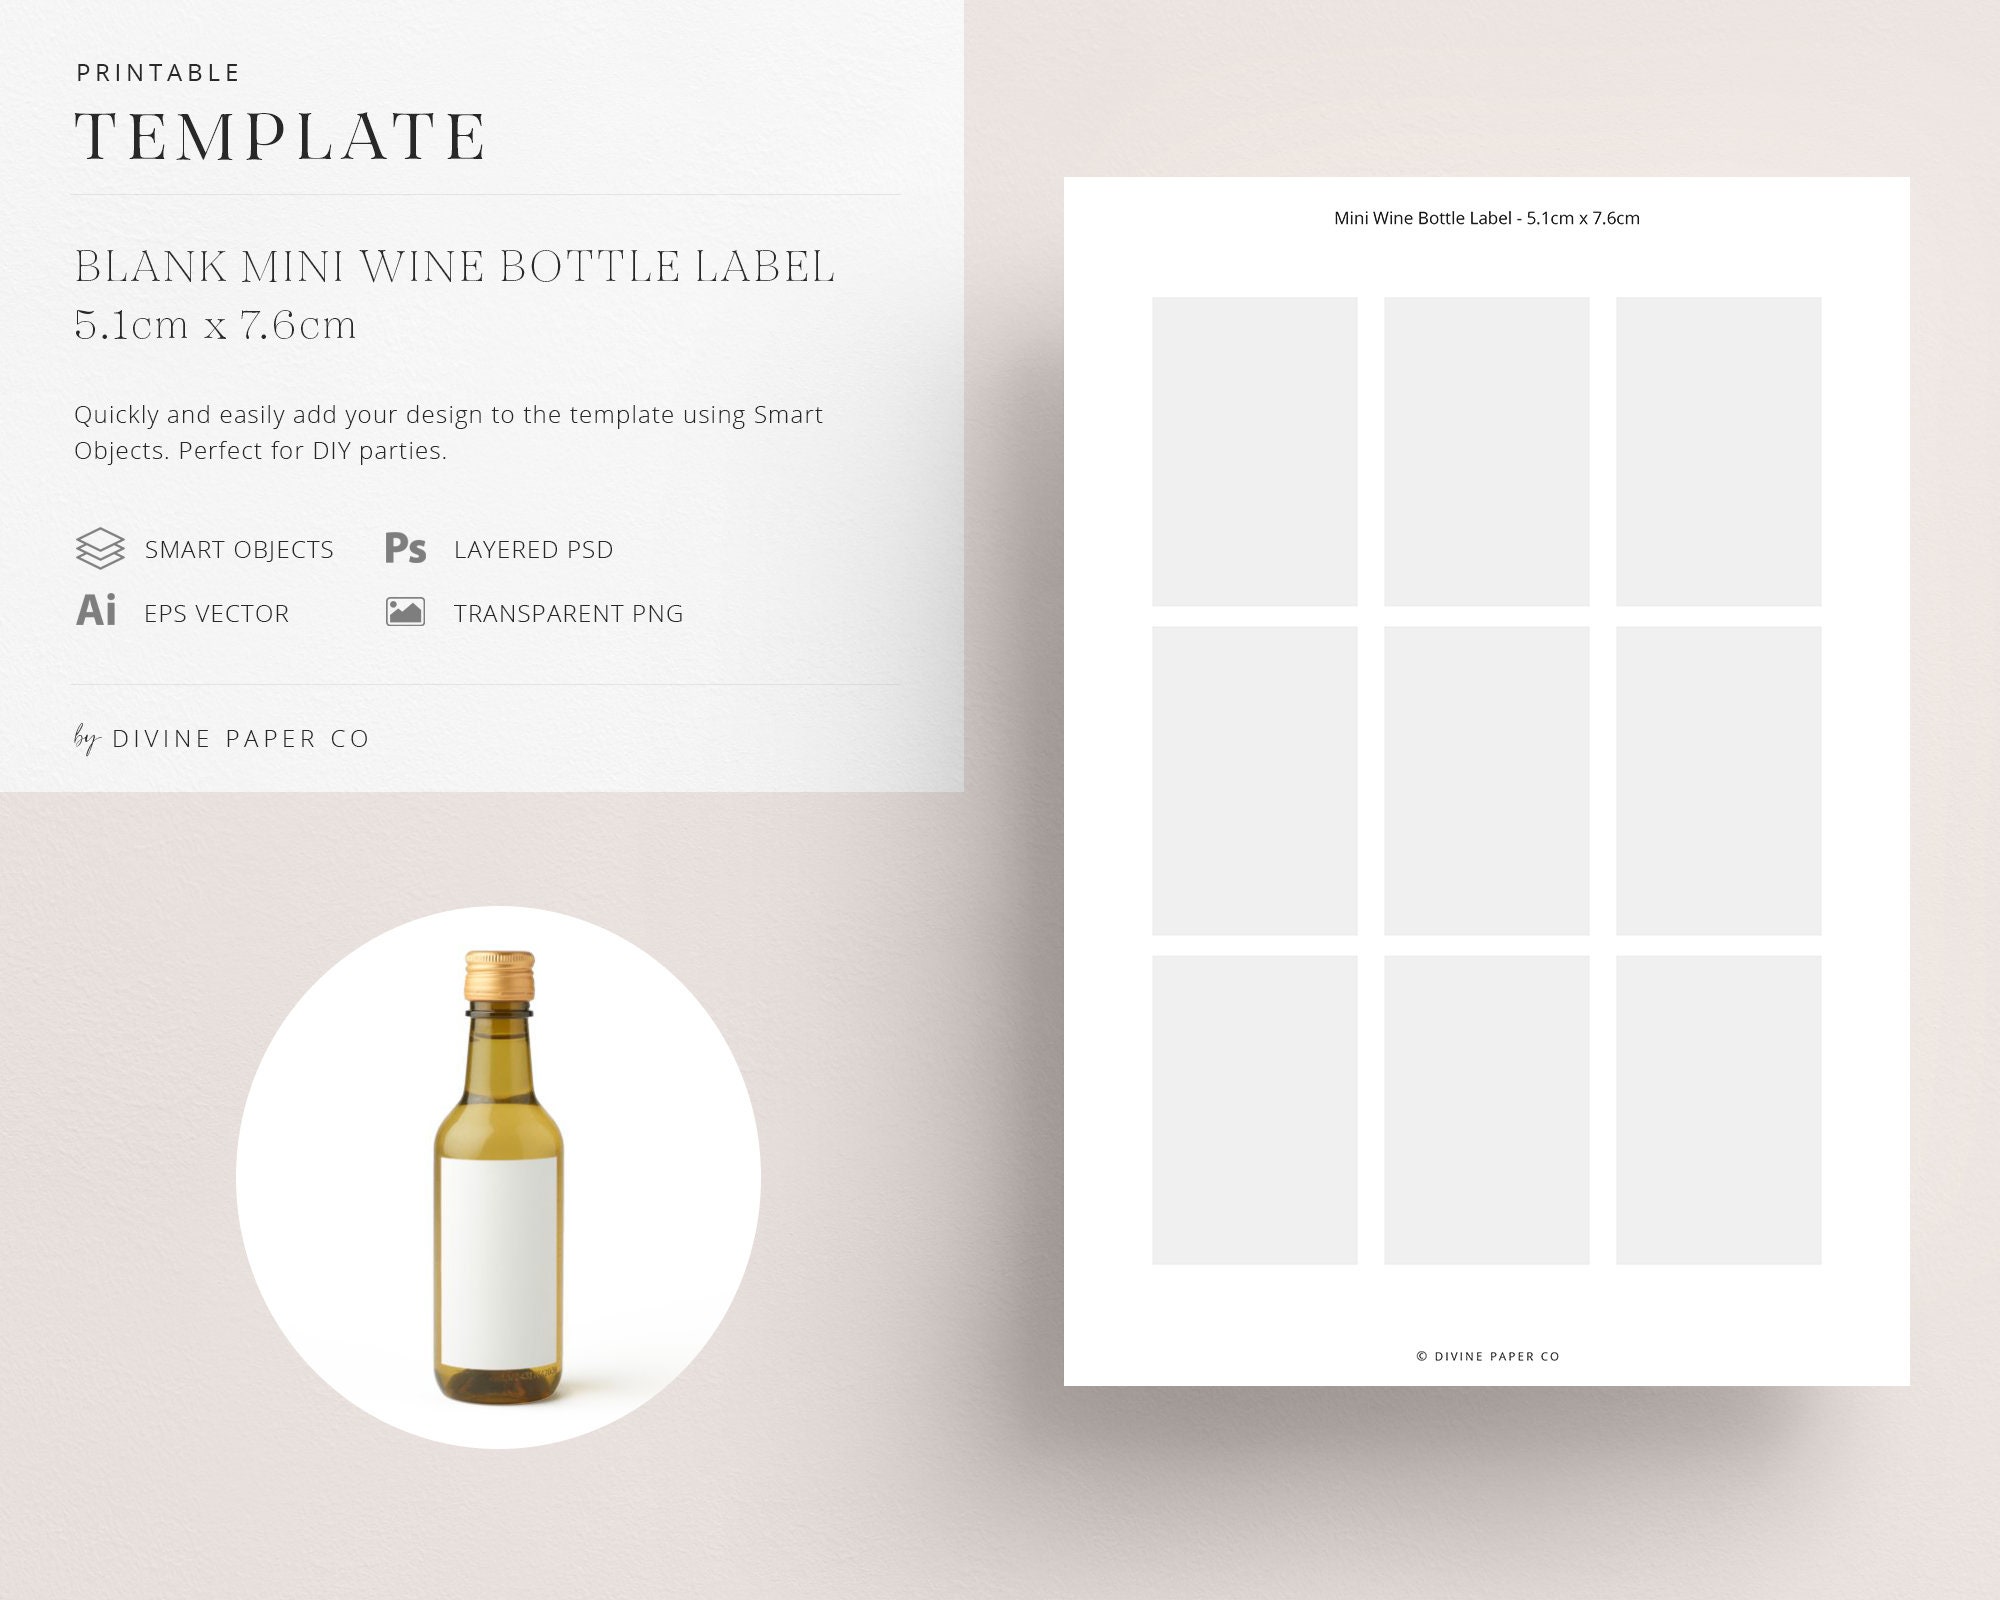 Blank Mini Wine Bottle Label Template. Editable Digital Etsy